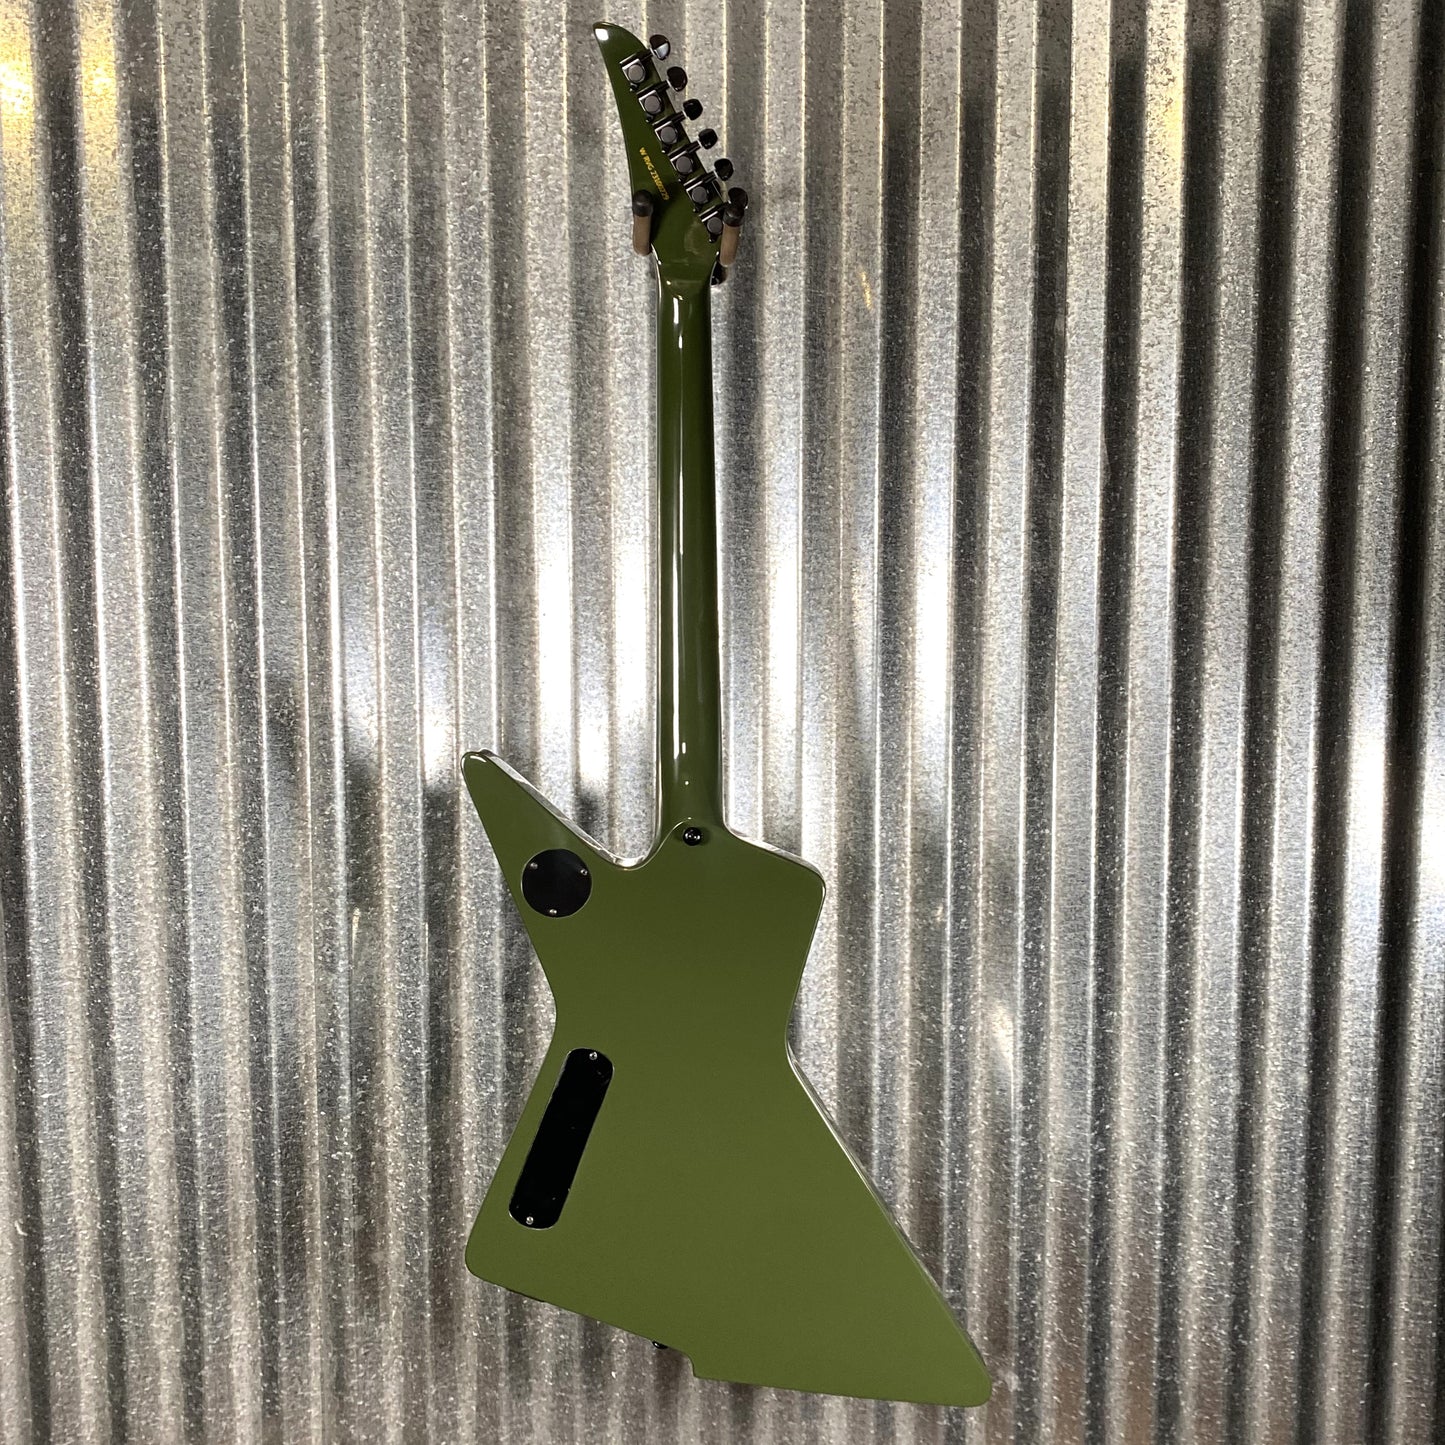 Westcreek Revenge Explorer Army Green Guitar #0229 Used